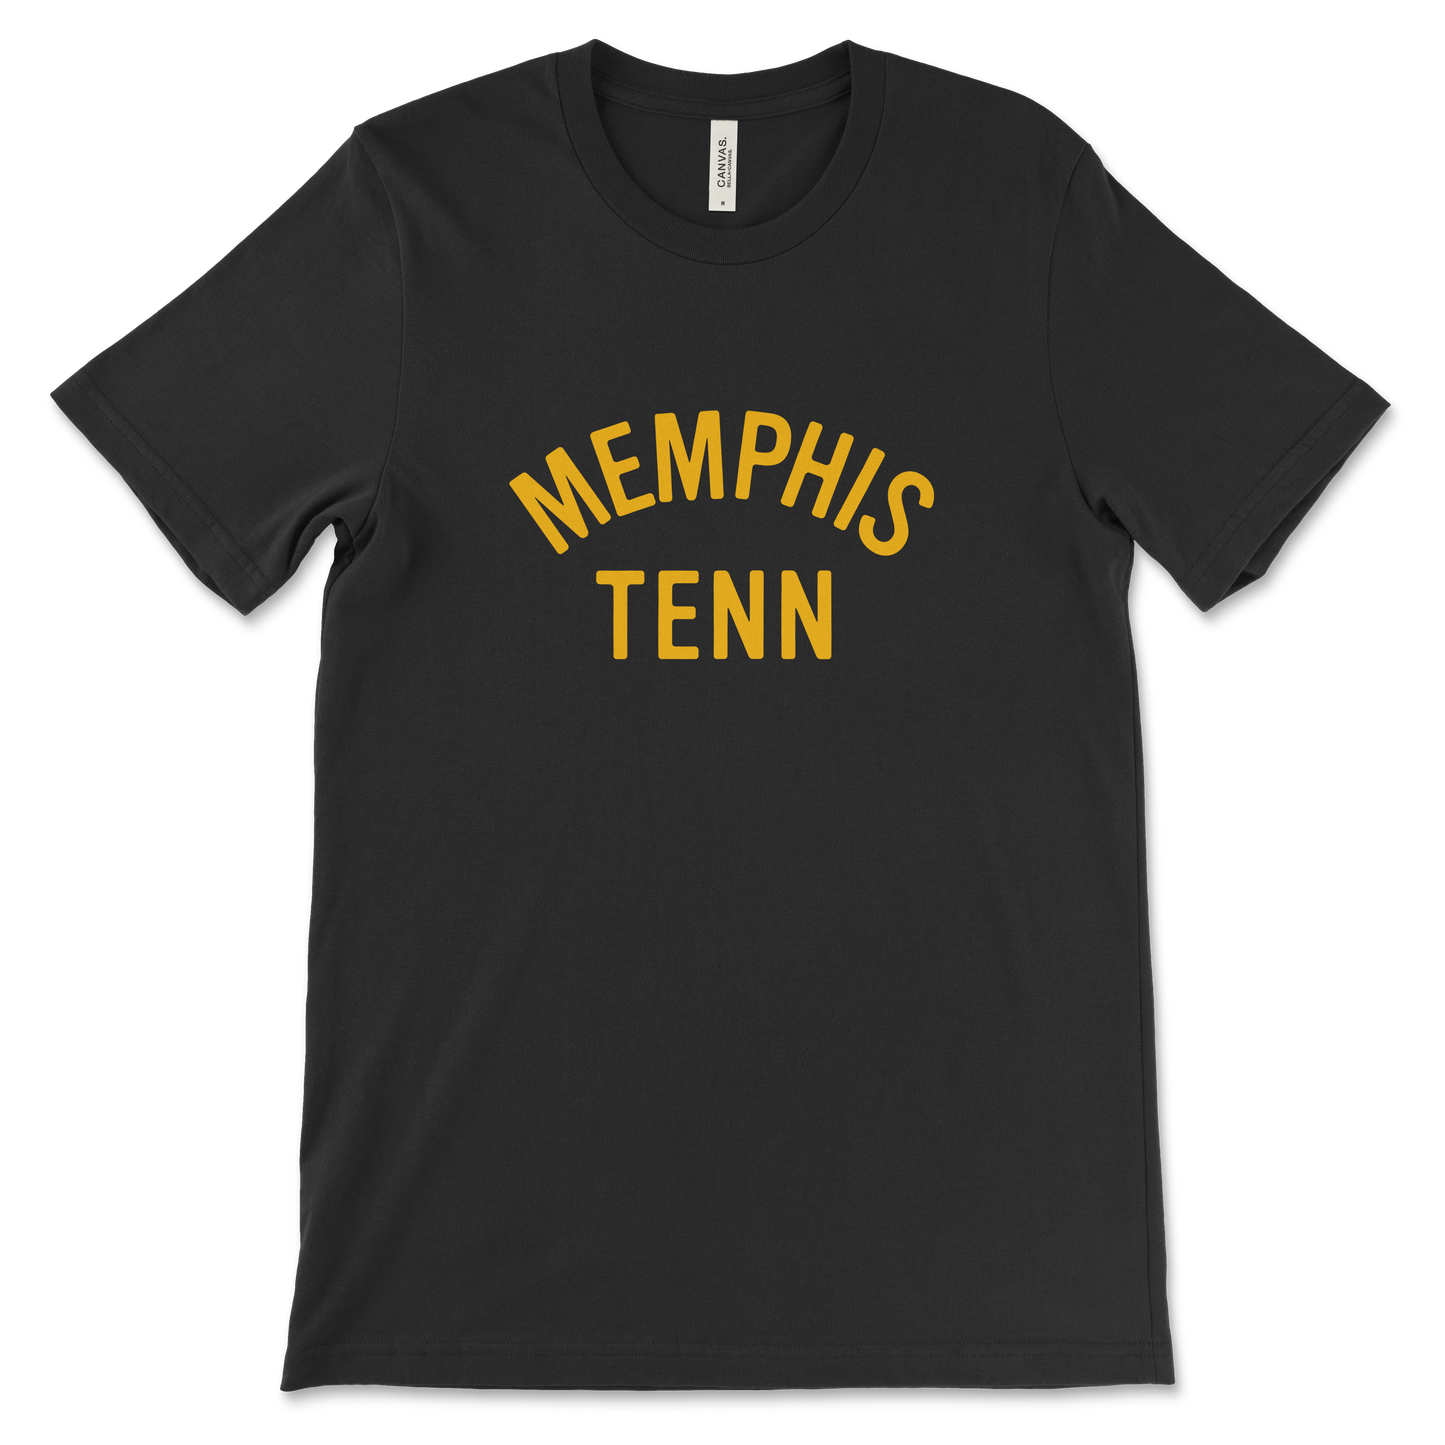 Black MEMPHIS TENN TEE with "Choose901 Memphis" text in yellow.